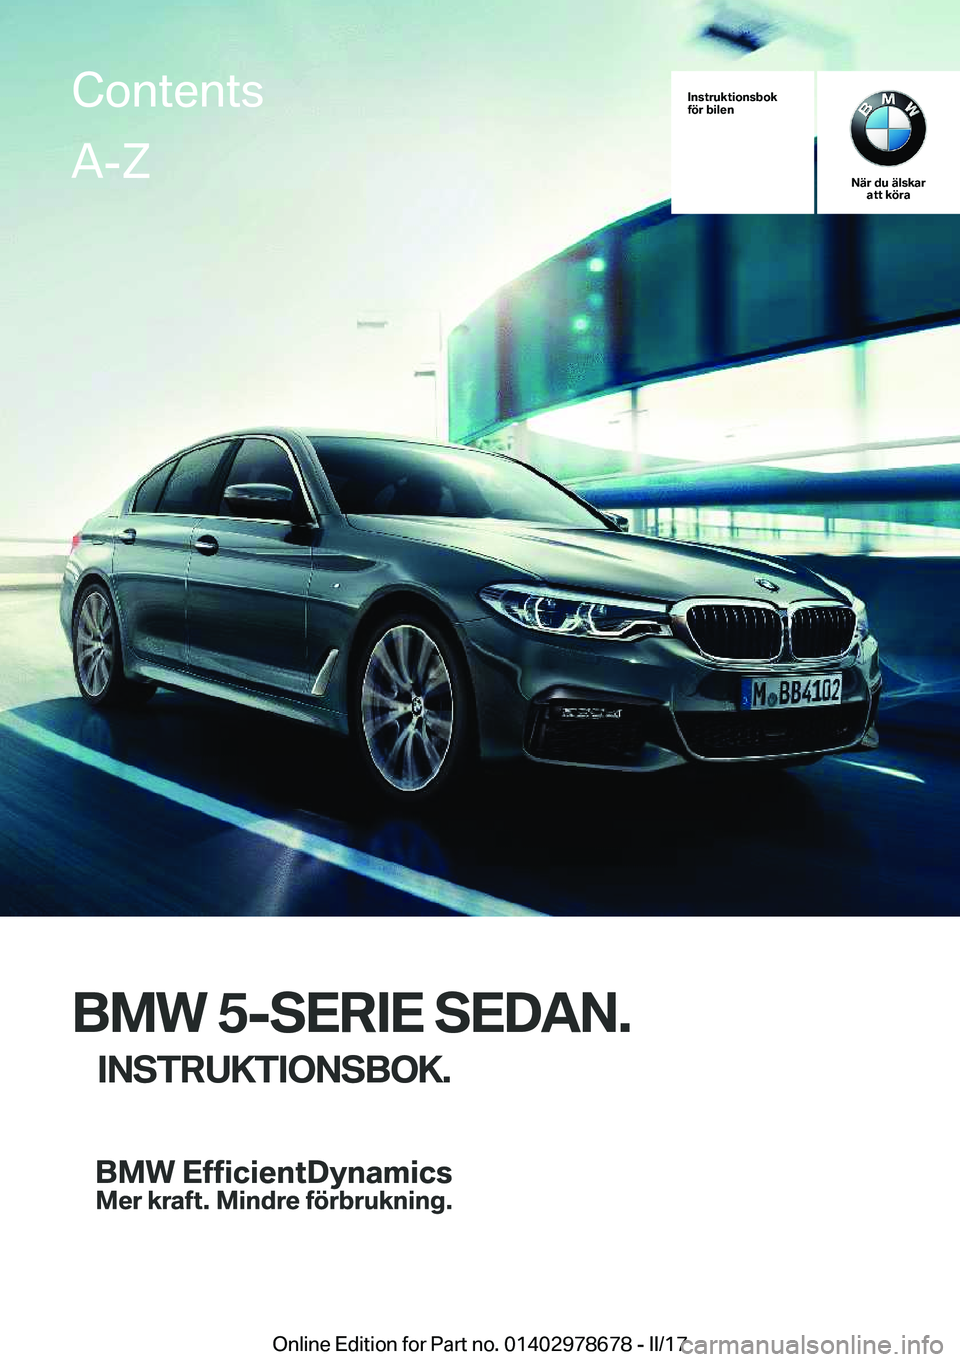 BMW 5 SERIES 2017  InstruktionsbÖcker (in Swedish) 